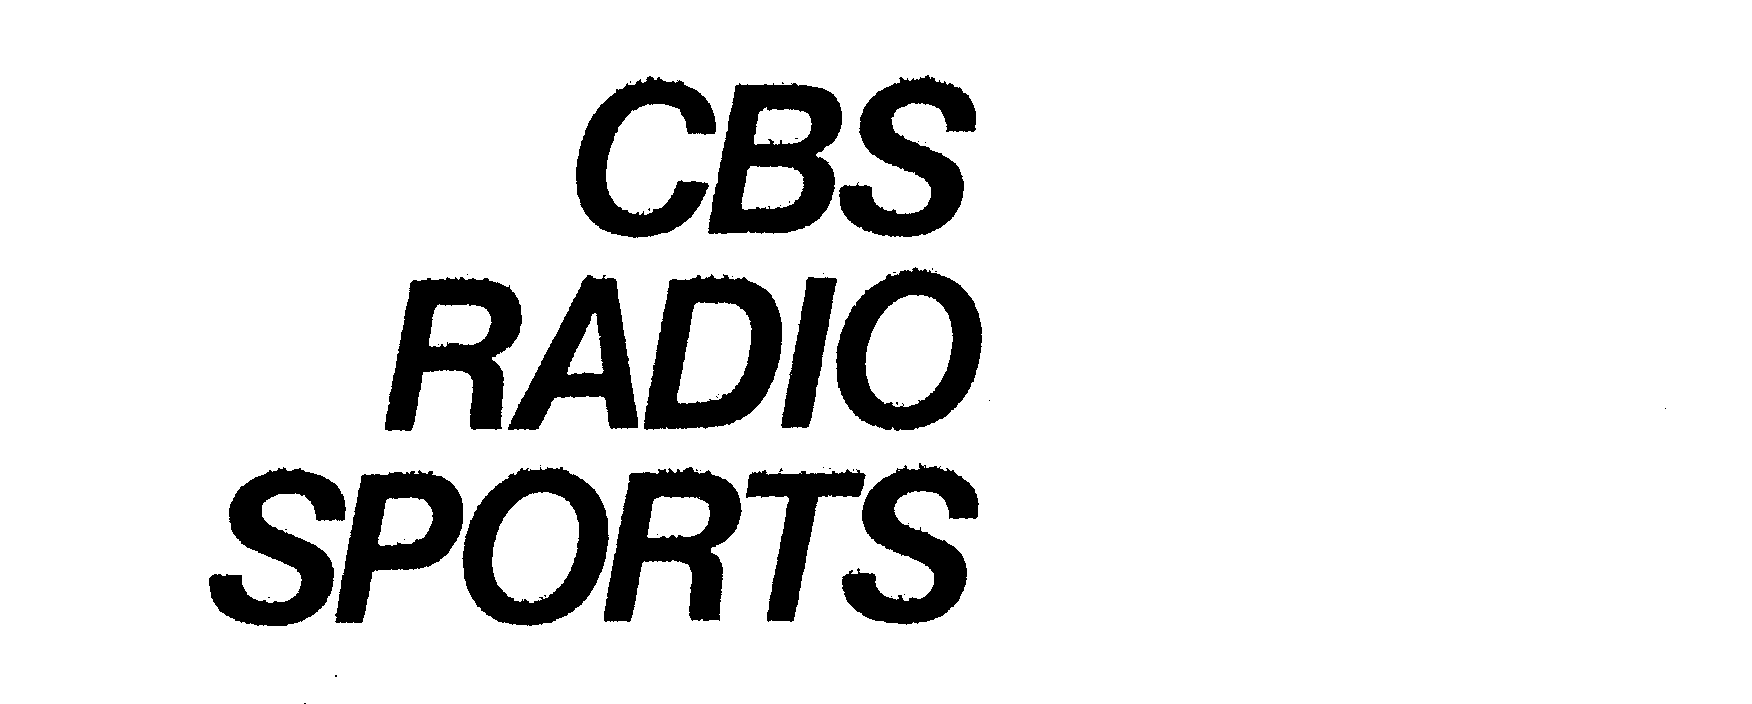  CBS RADIO SPORTS